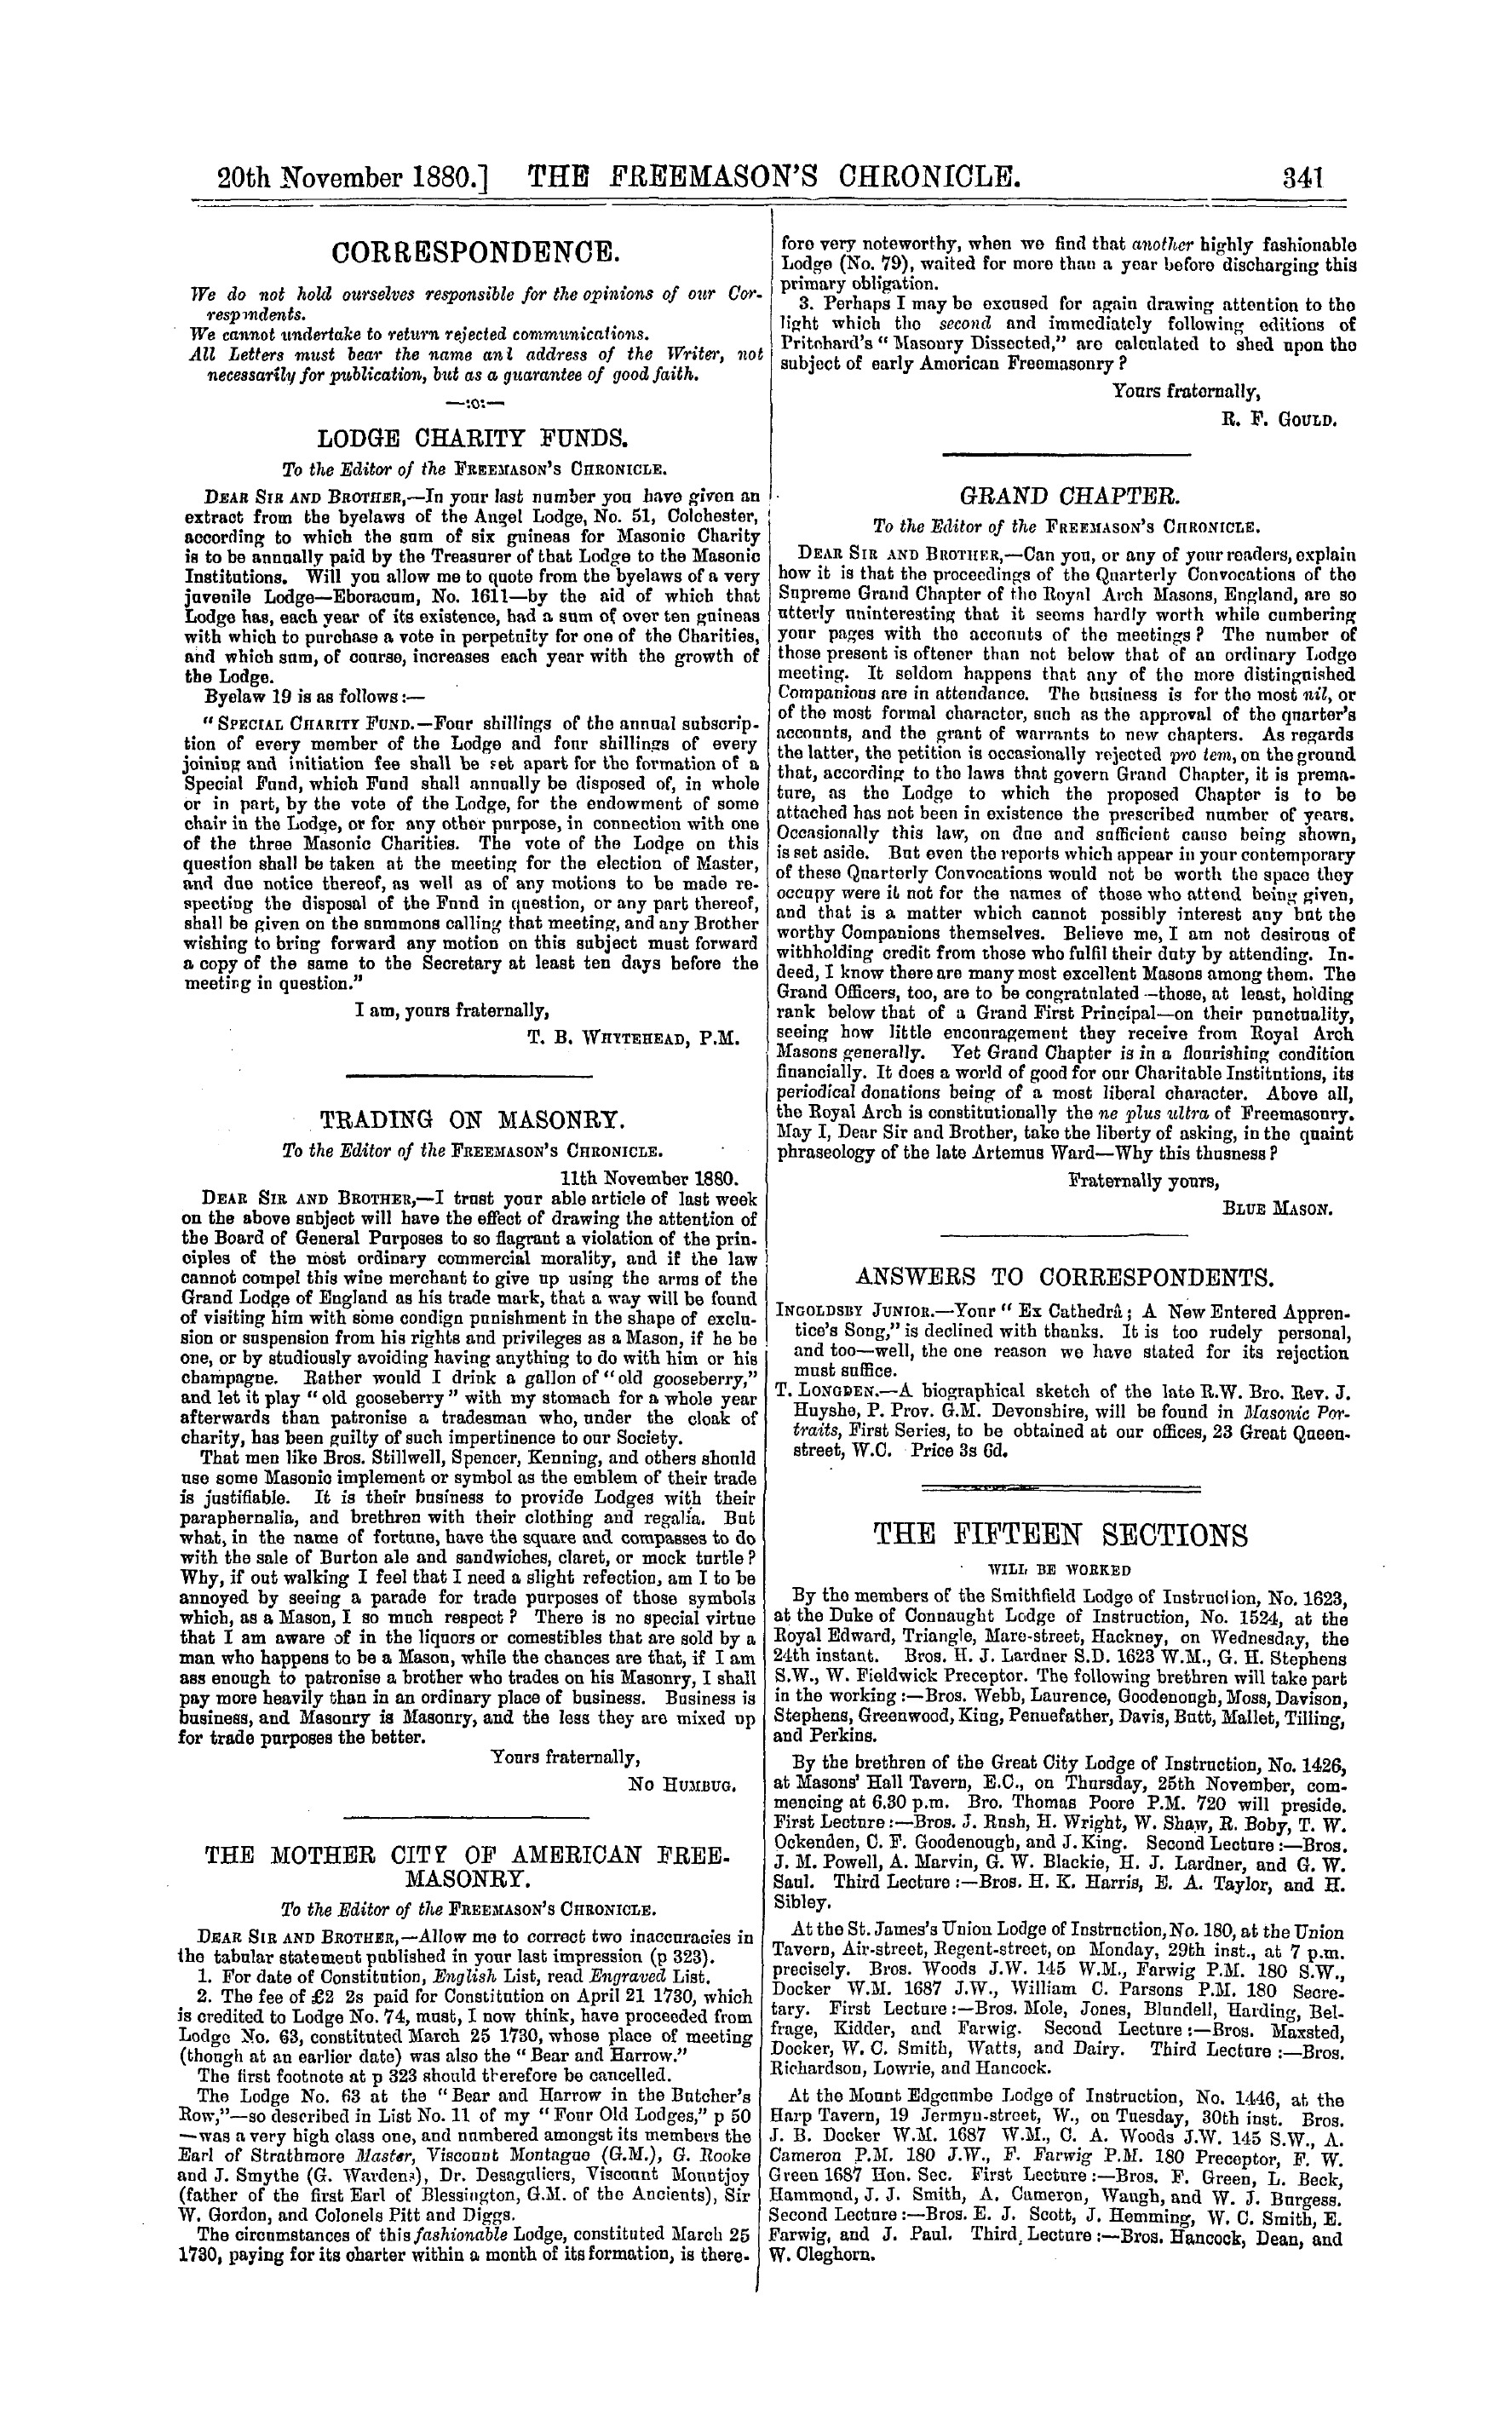 The Freemason's Chronicle: 1880-11-20 - Grand Chapter.